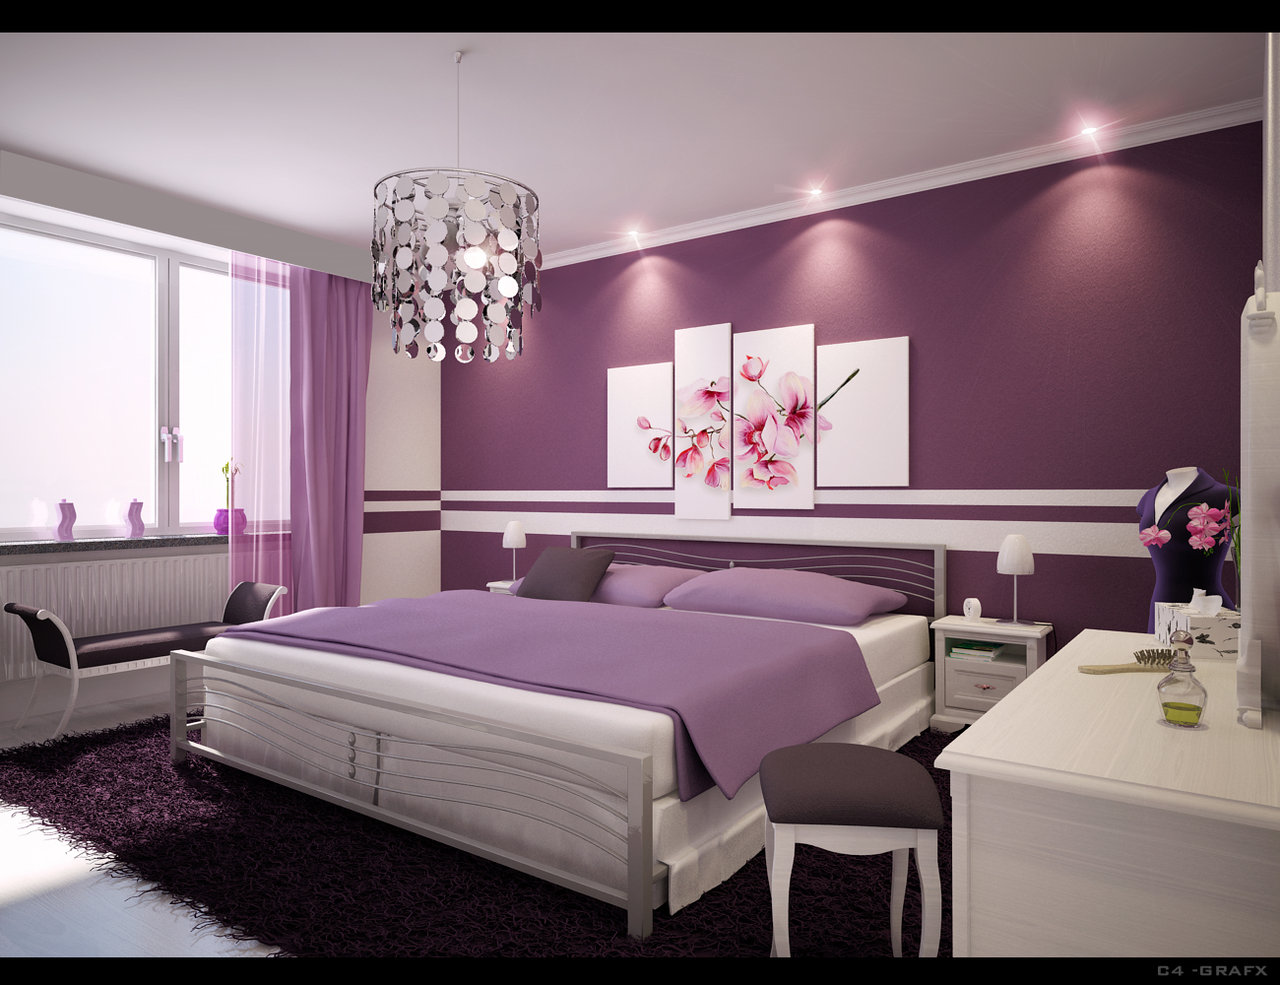 Top Girls Bedroom Interior Design Ideas 1280 x 985 · 201 kB · jpeg